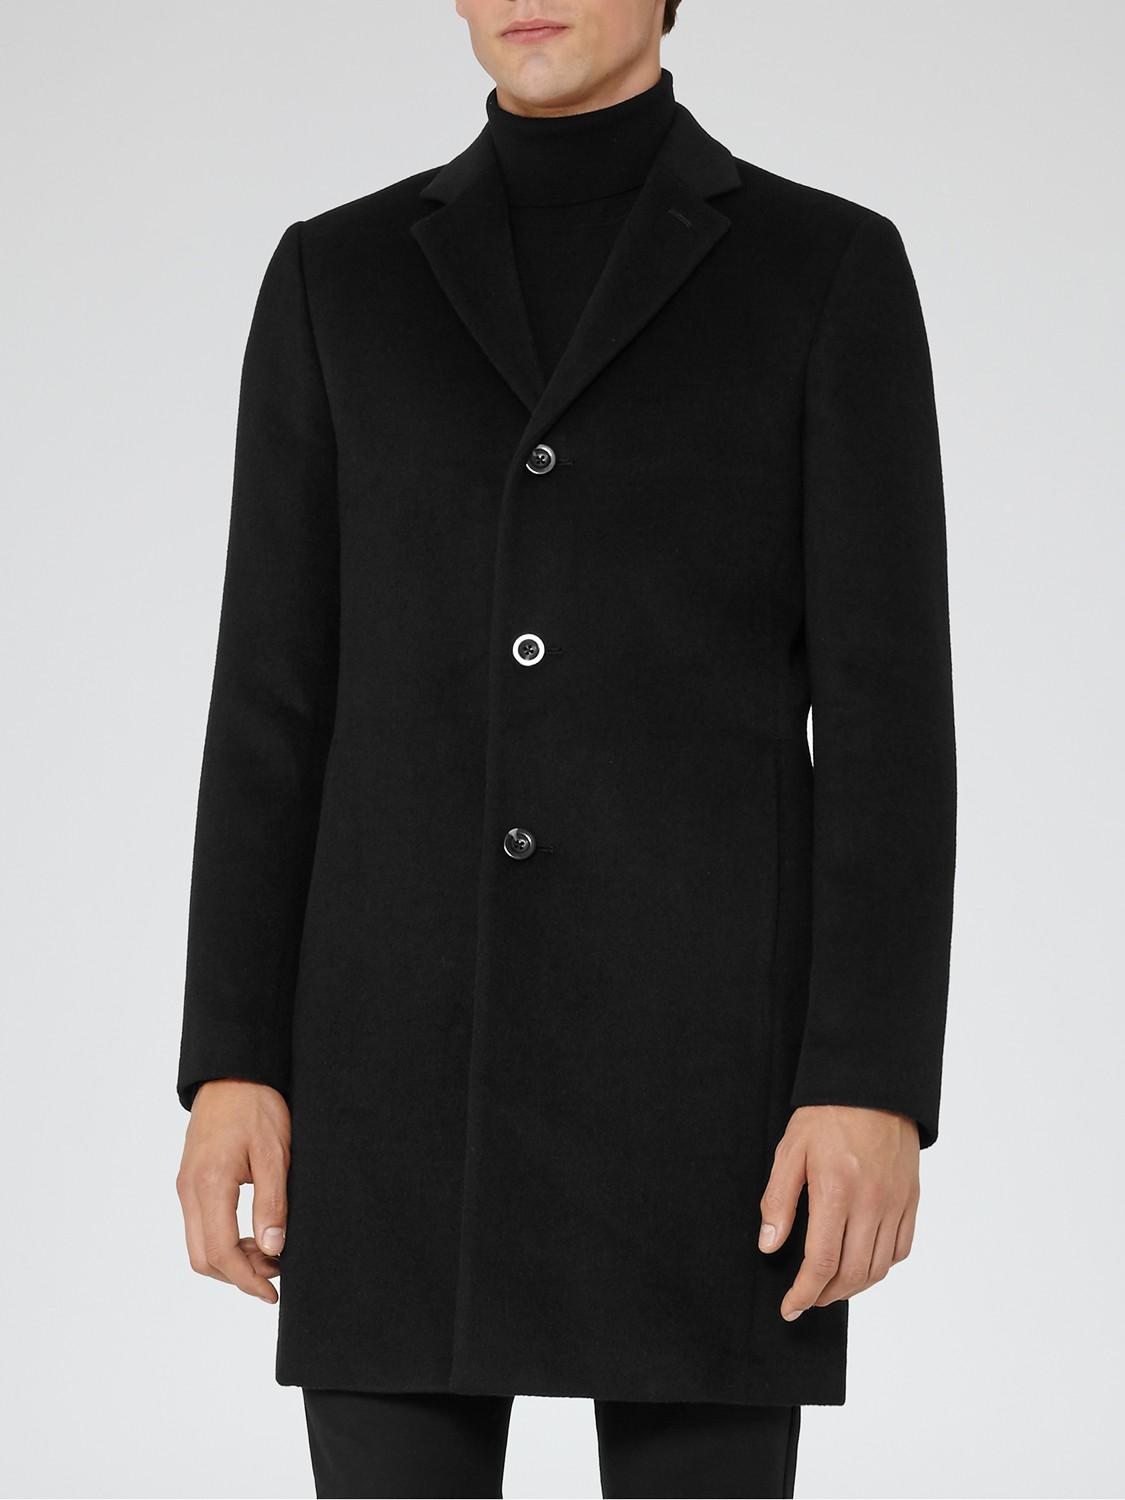 Reiss Wool Gabriel Epsom Coat in Black for Men - Lyst